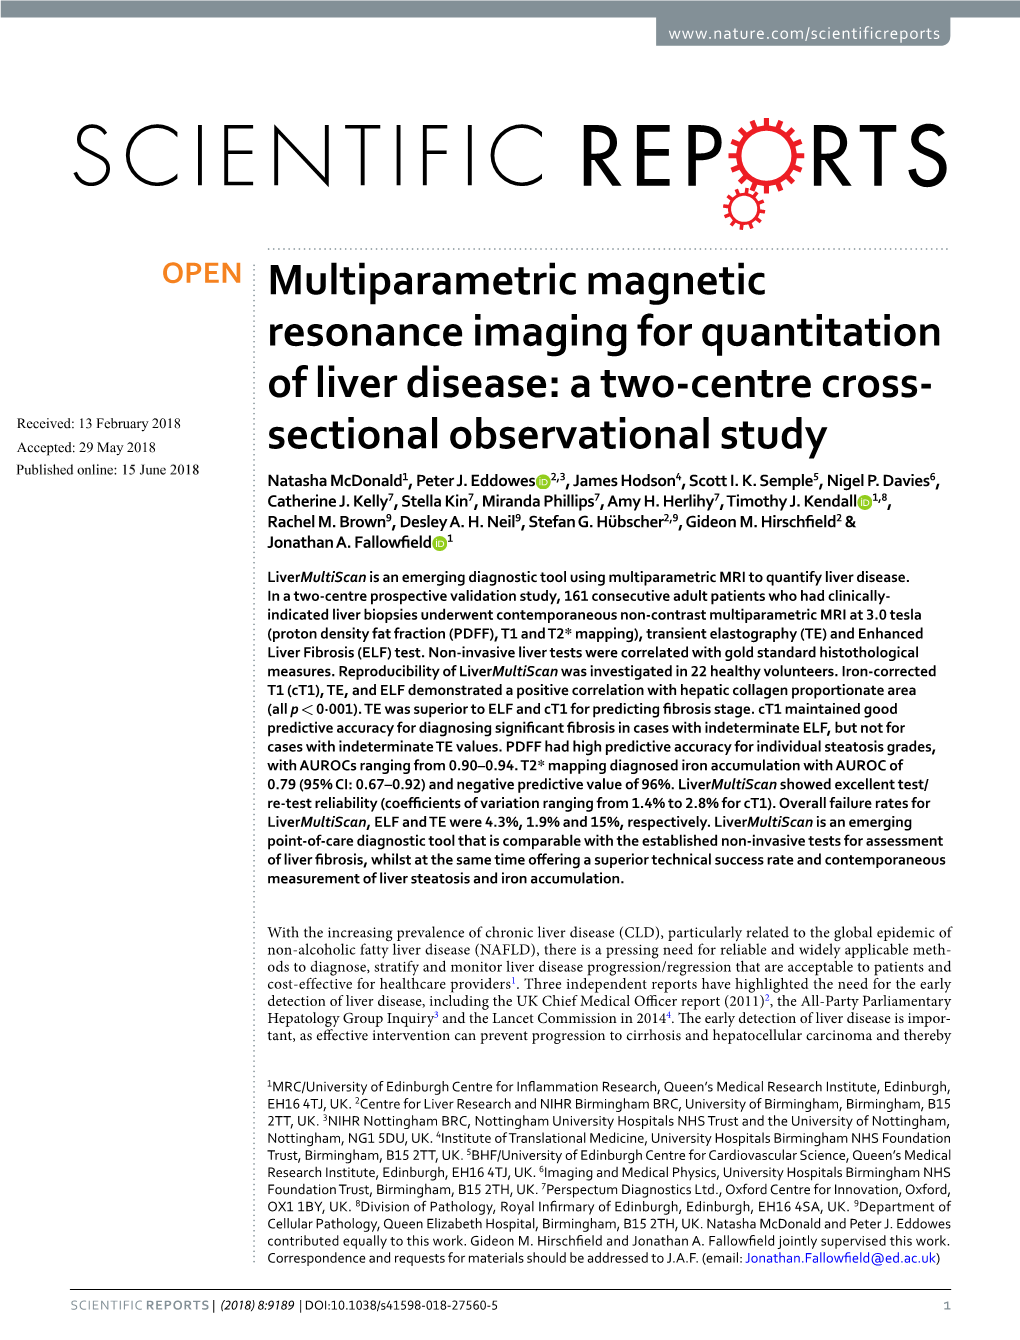 Multiparametric Magnetic Resonance Imaging for Quantitation Of